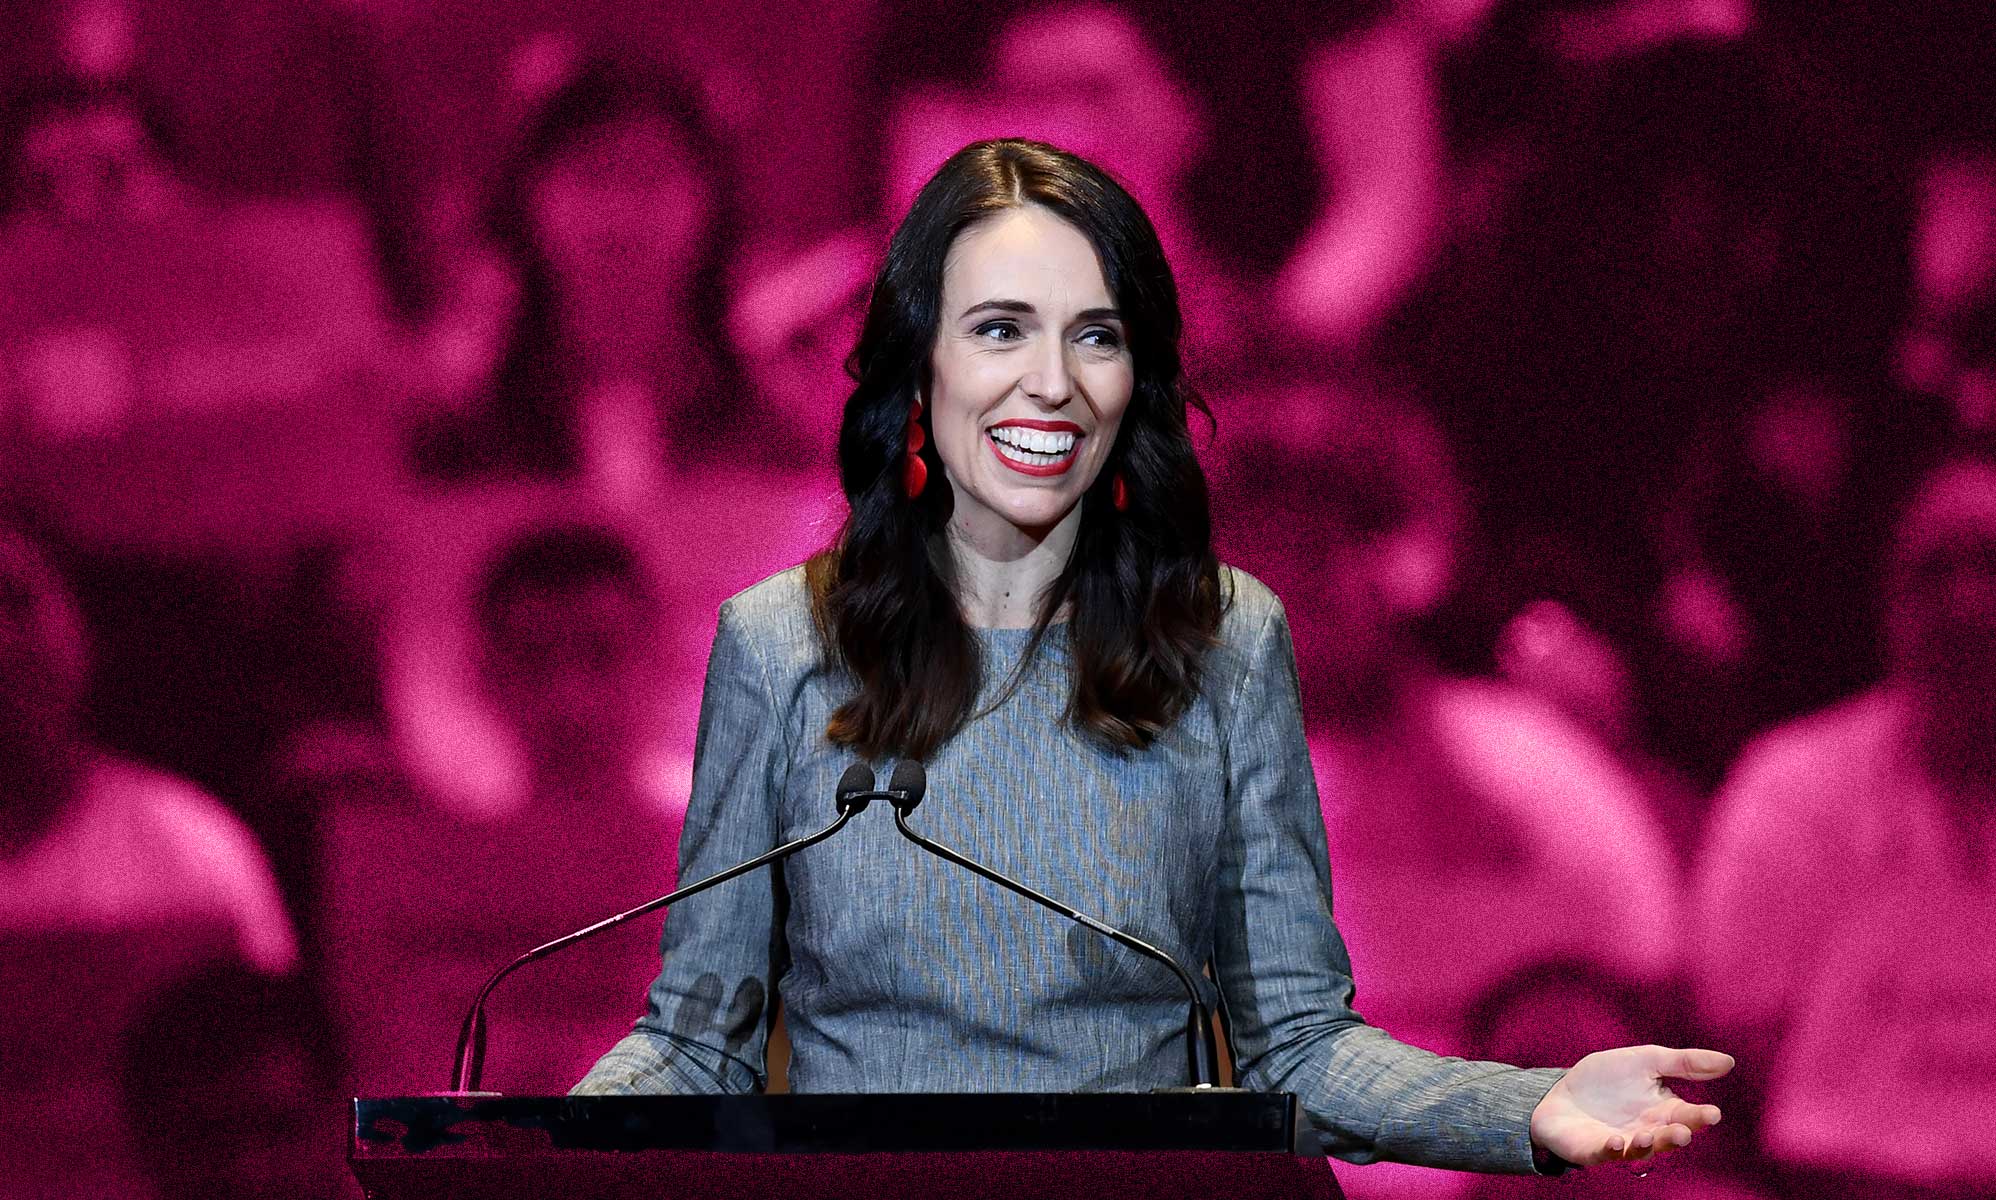 Dimite la primera ministra neozelandesa dejando un gran legado de derechos LGTB+